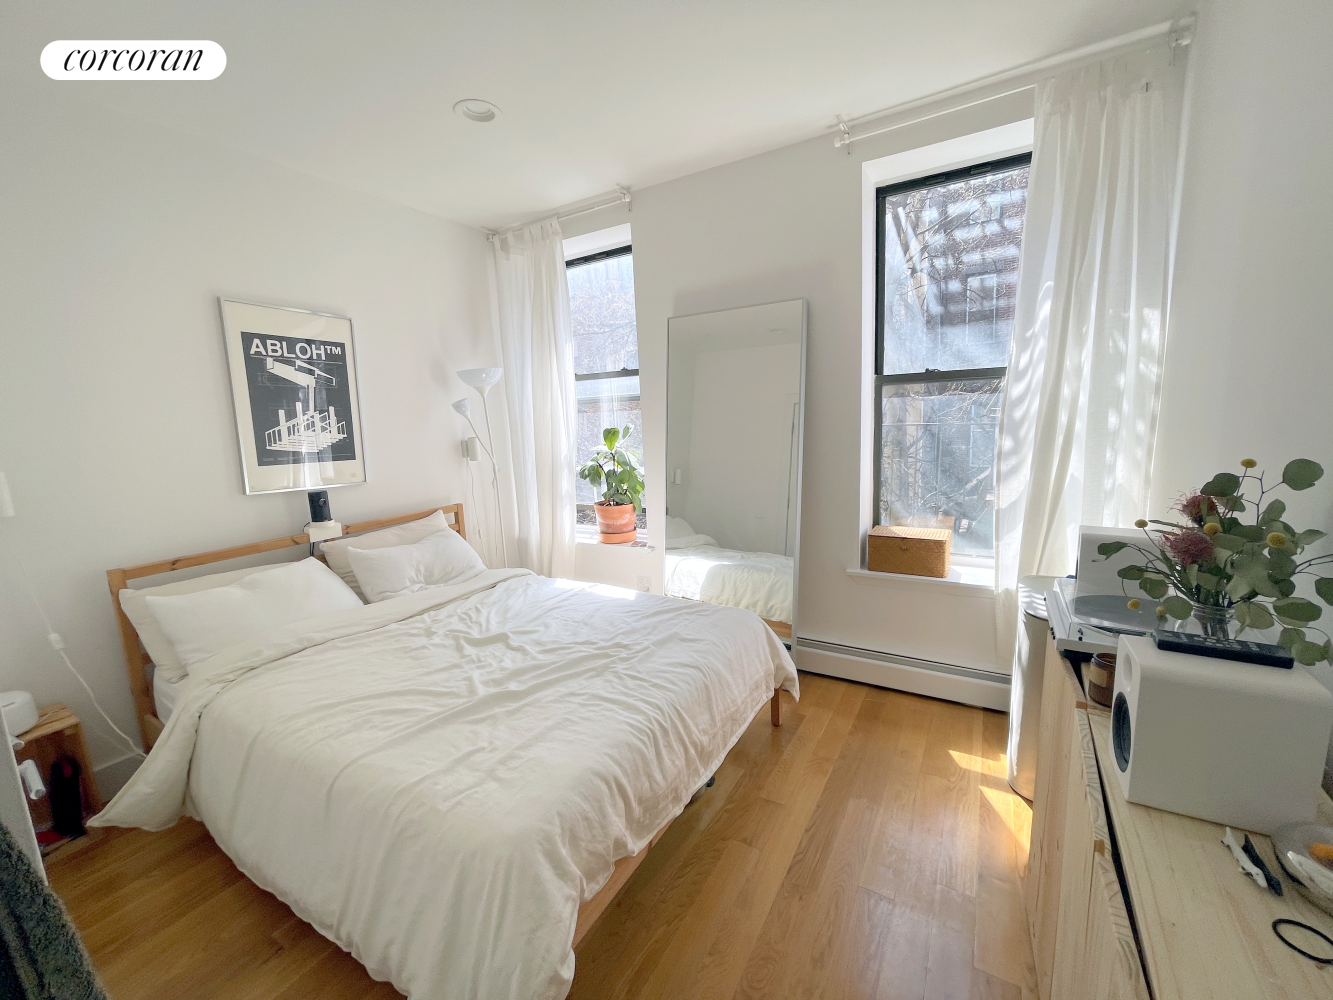 56 West 127th Street 2B, Central Harlem, Upper Manhattan, NYC - 2 Bedrooms  
1 Bathrooms  
4 Rooms - 